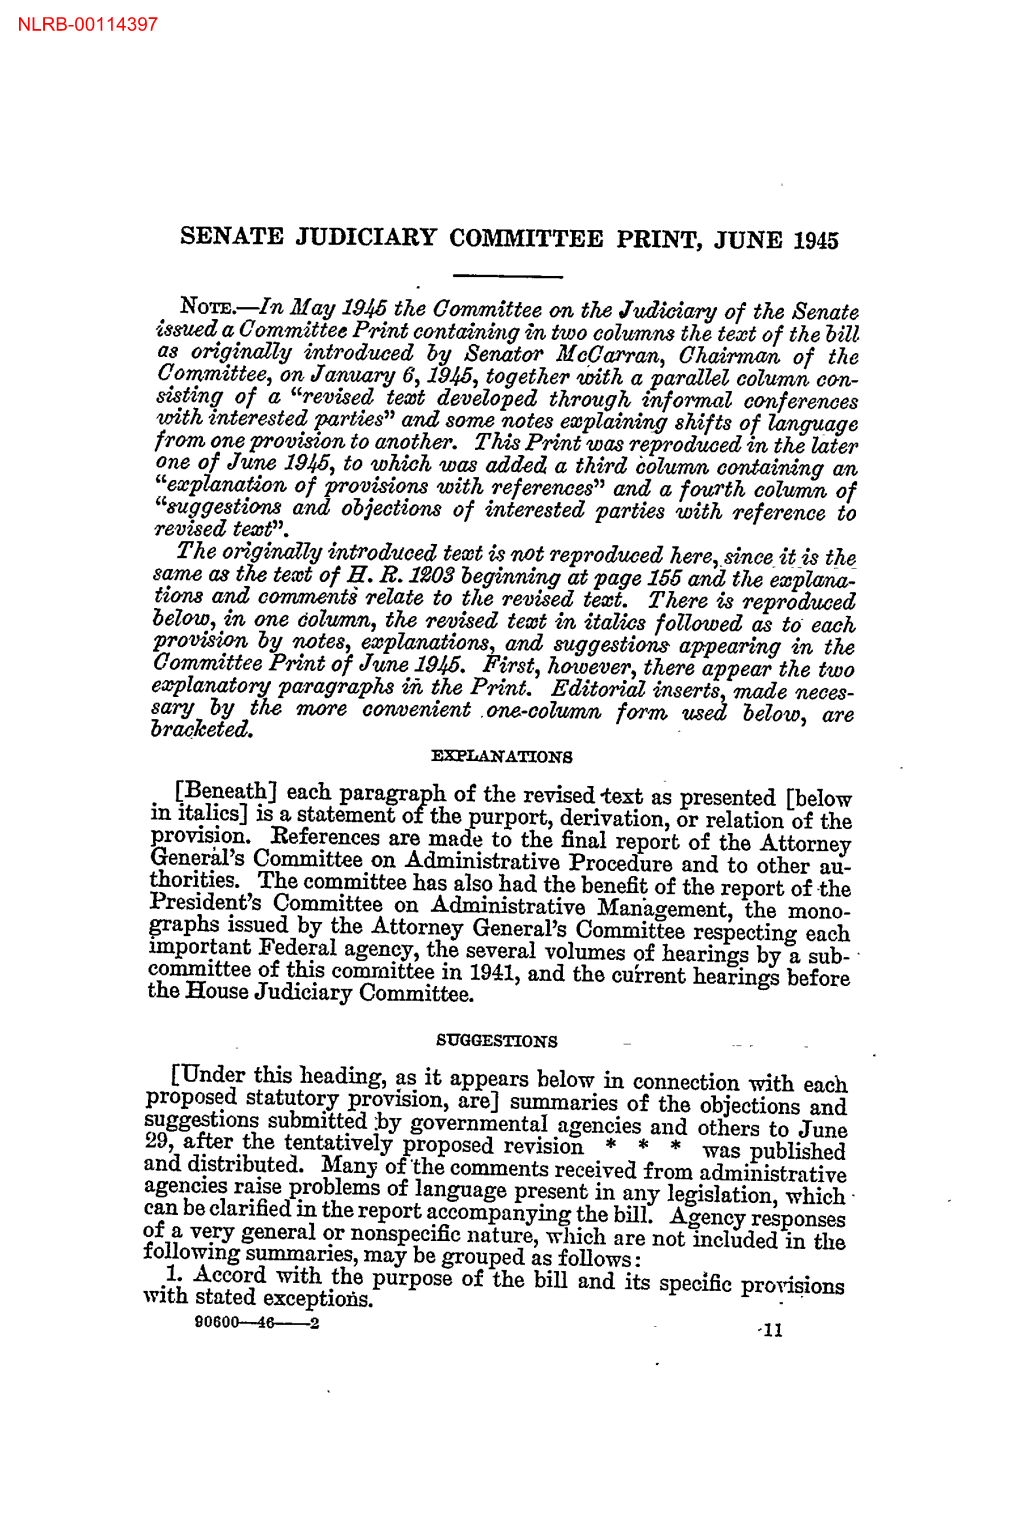 Senate Judiciary Committee Print, June 1945